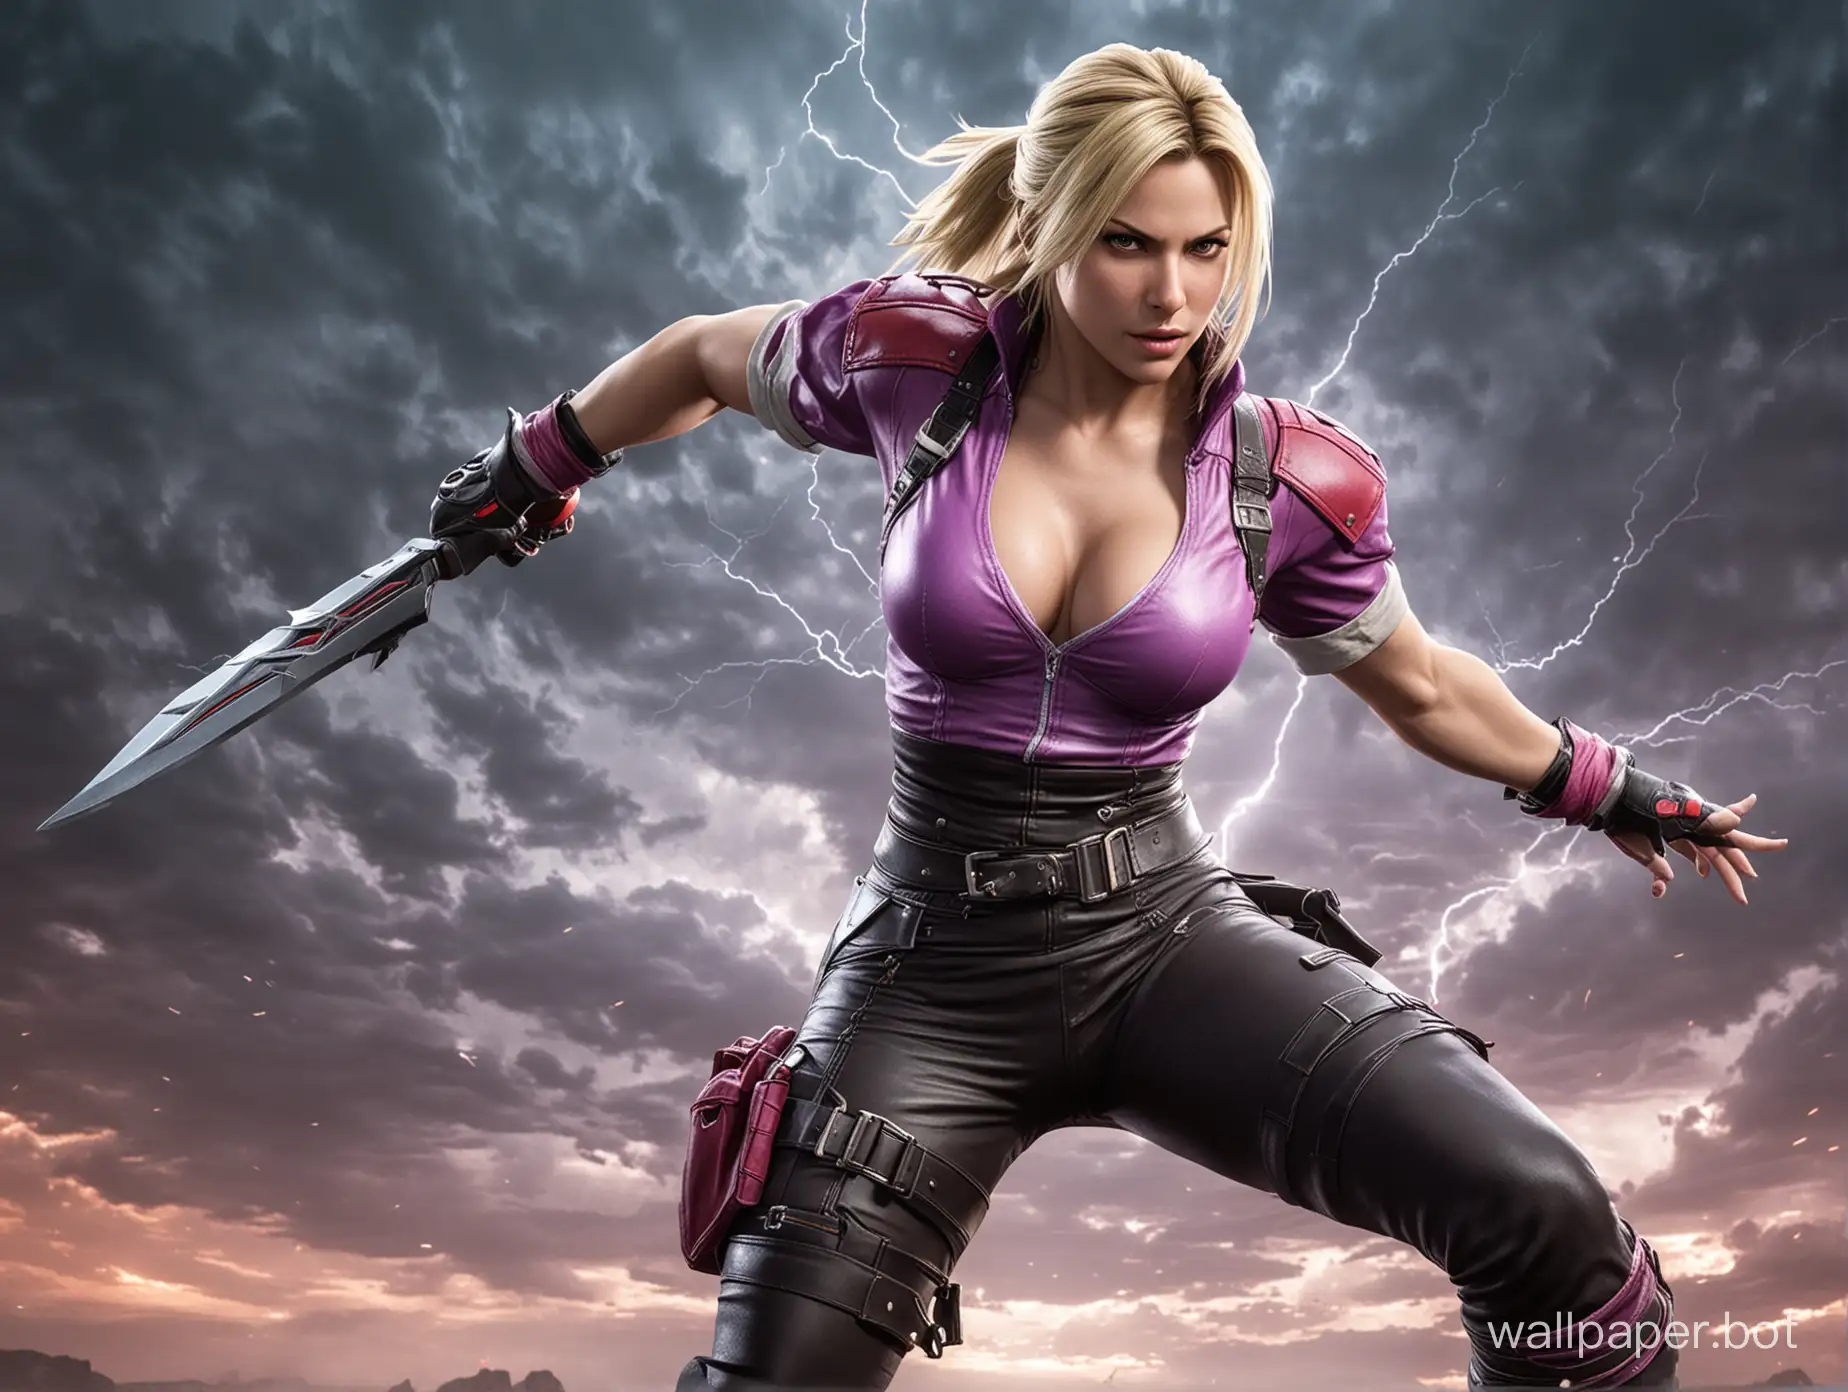 Nina Williams from Tekken series, fighting pose, thunder in the sky background